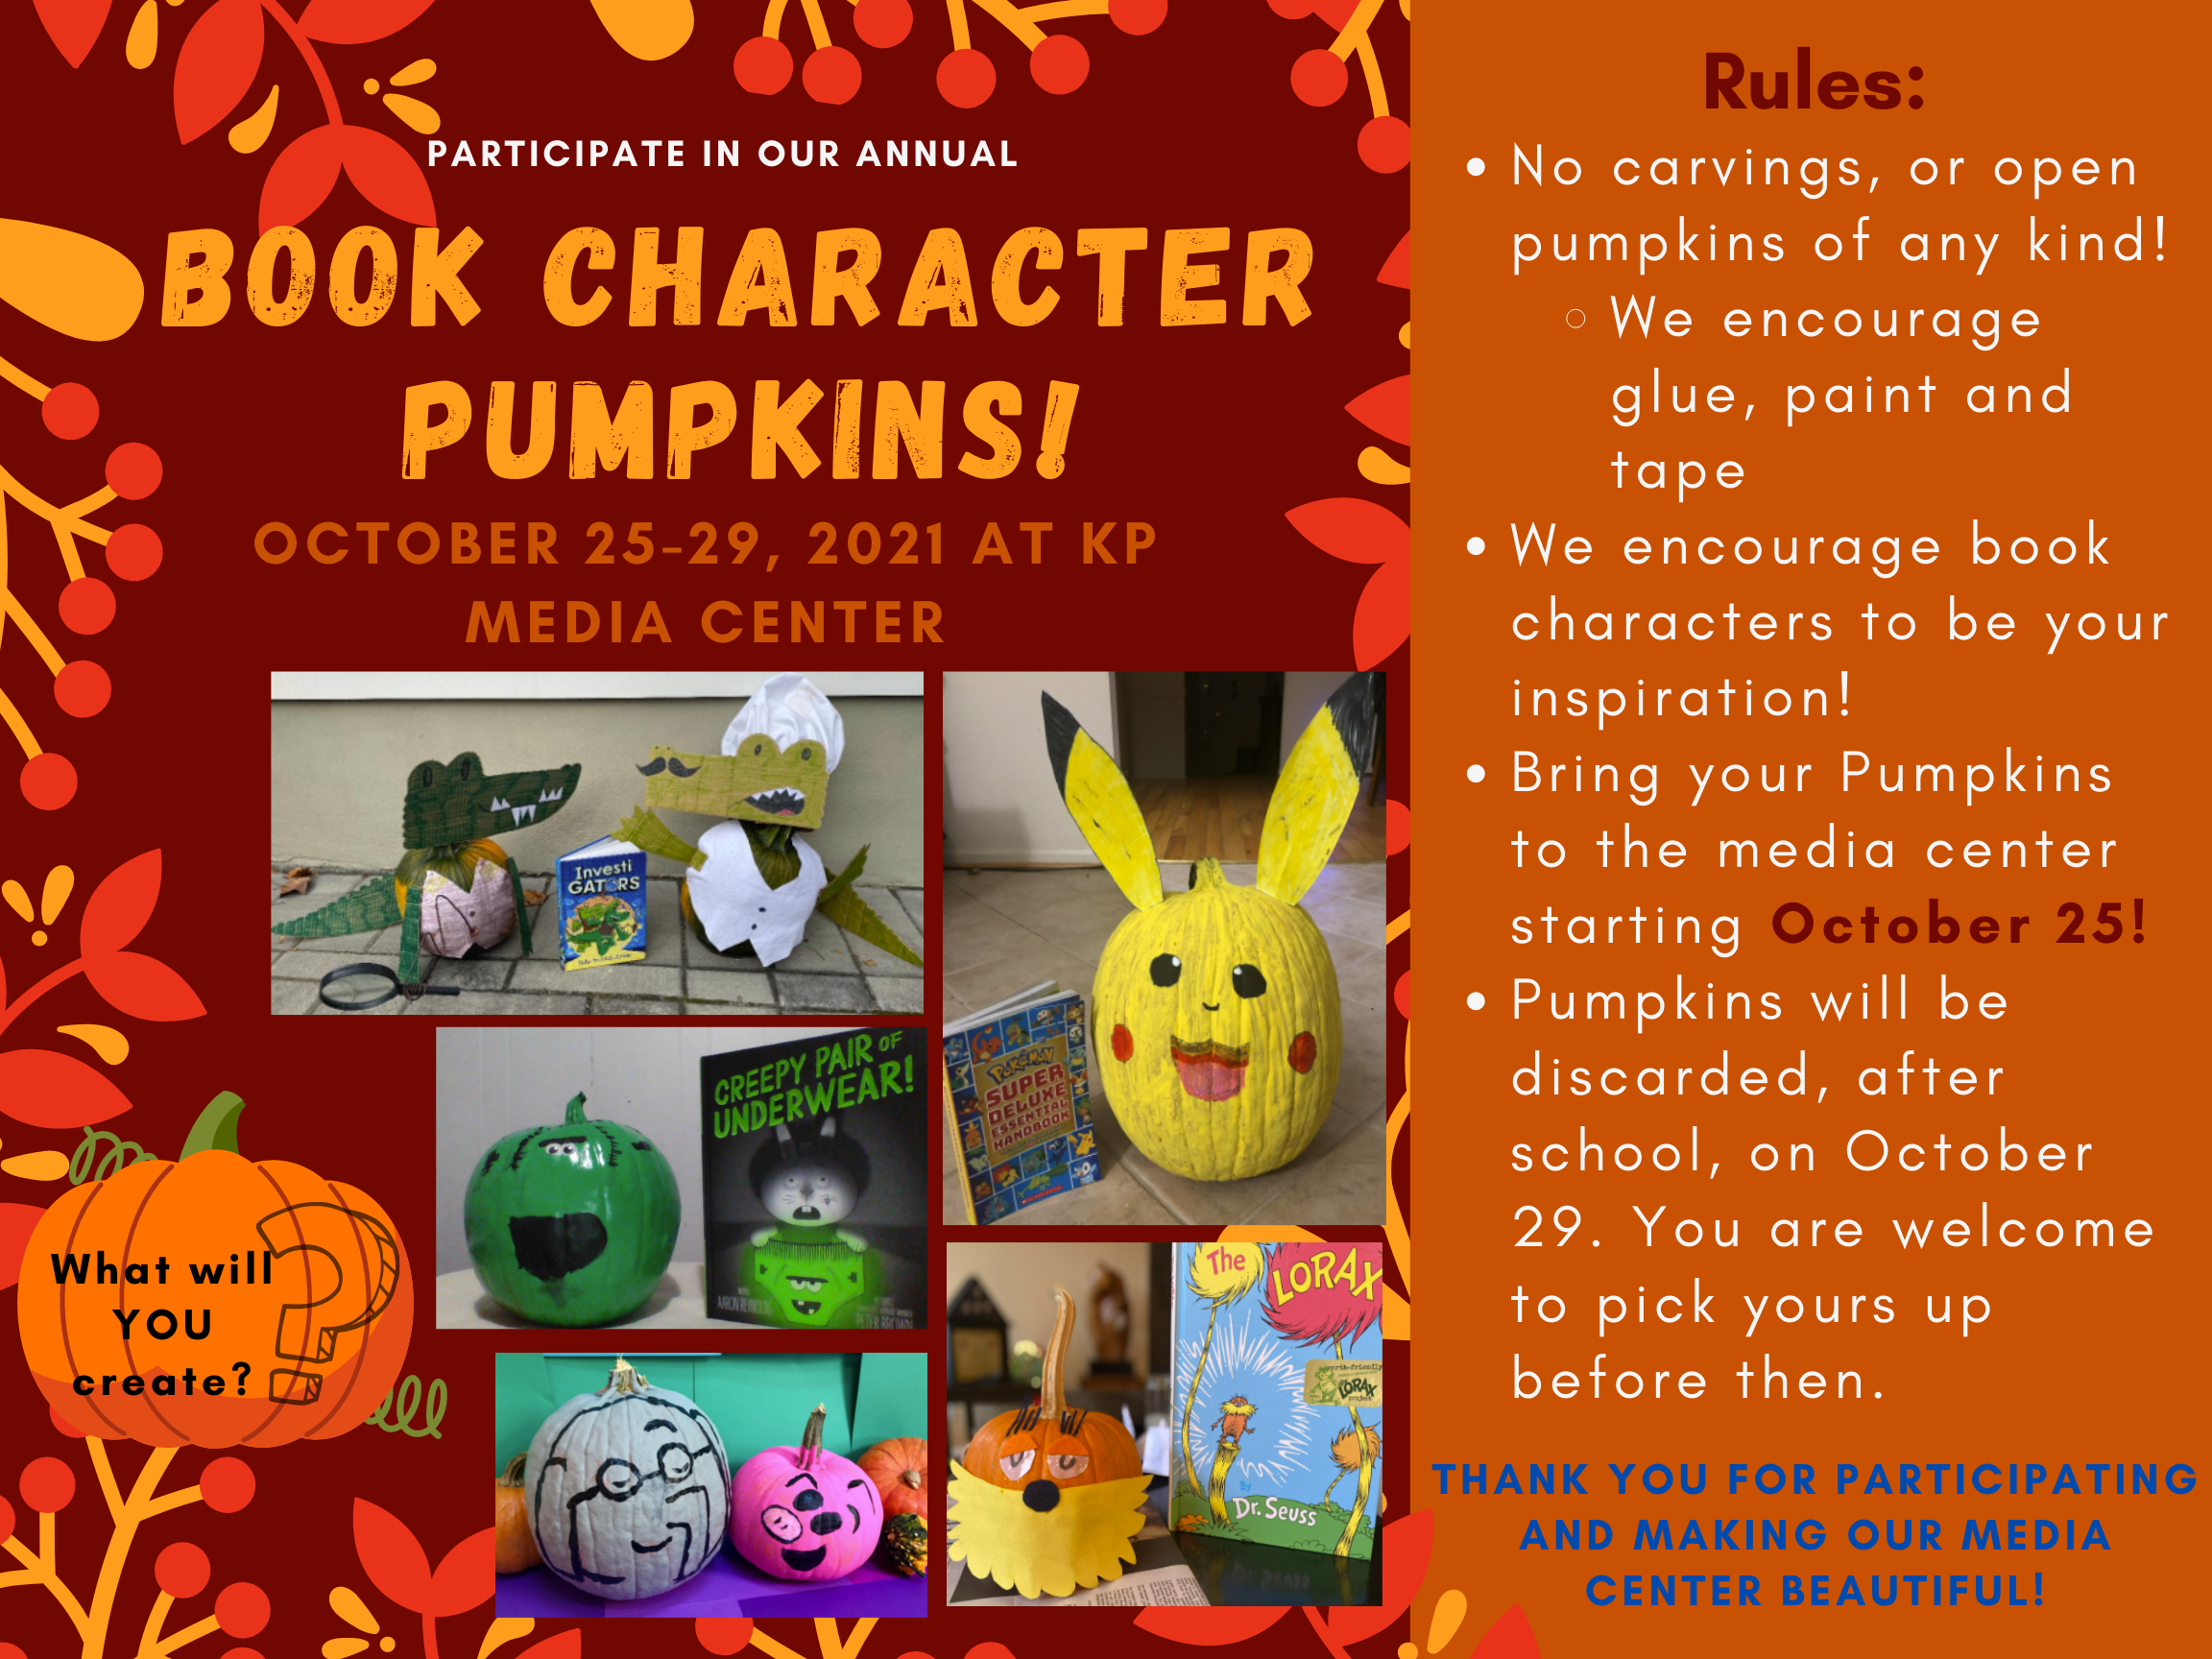 Book Character Pumpkin Poster.png